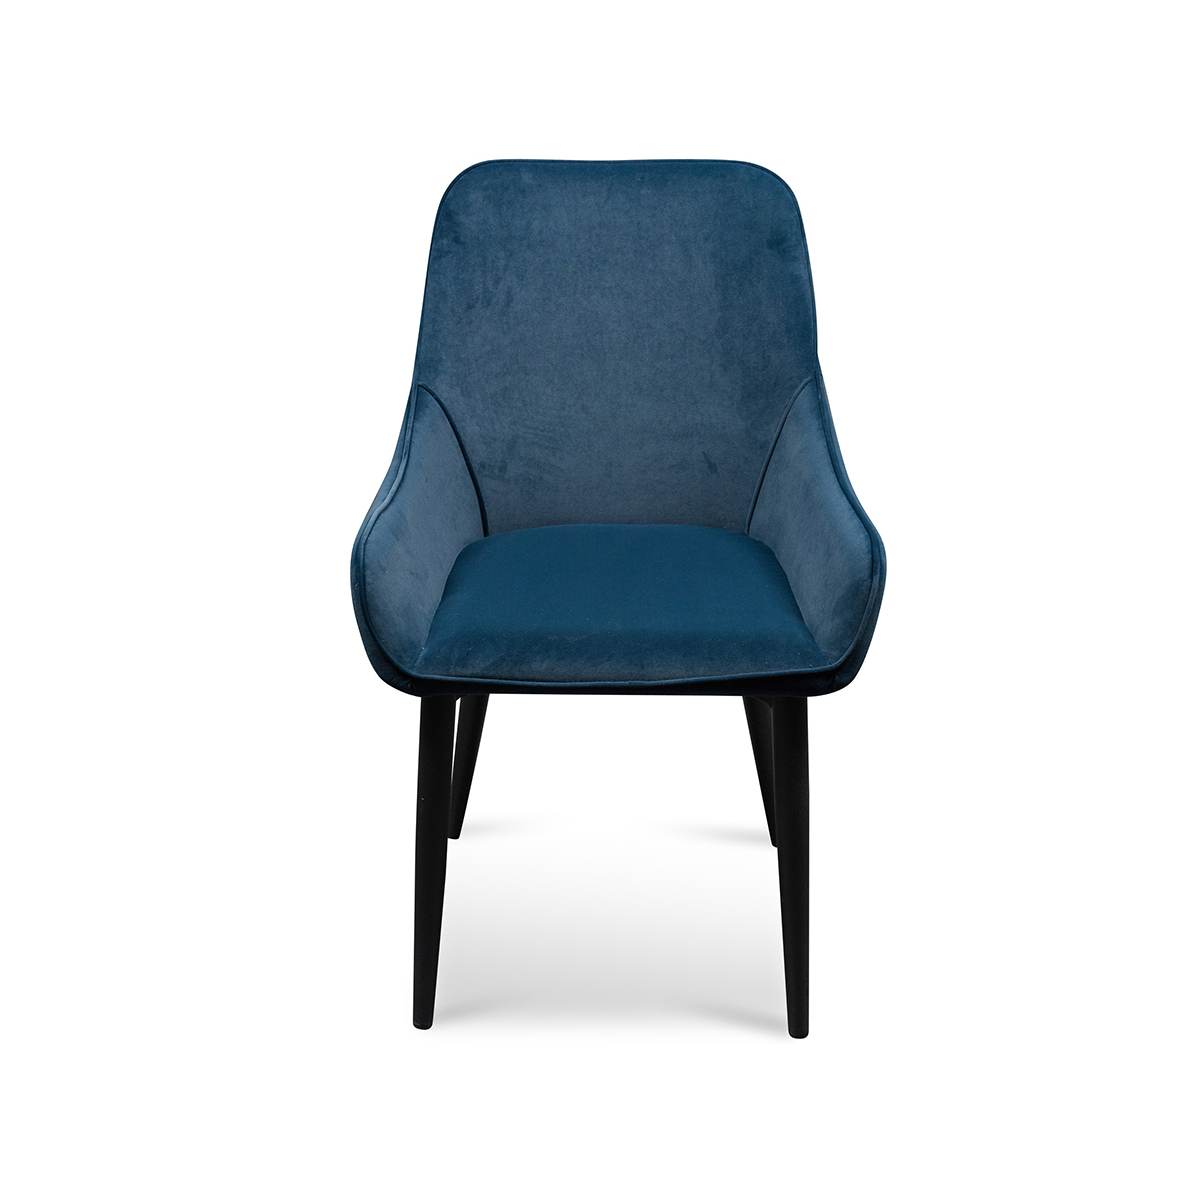 FondHouse Woran Dining Chair - Navy Blue Velvet with Black Legs